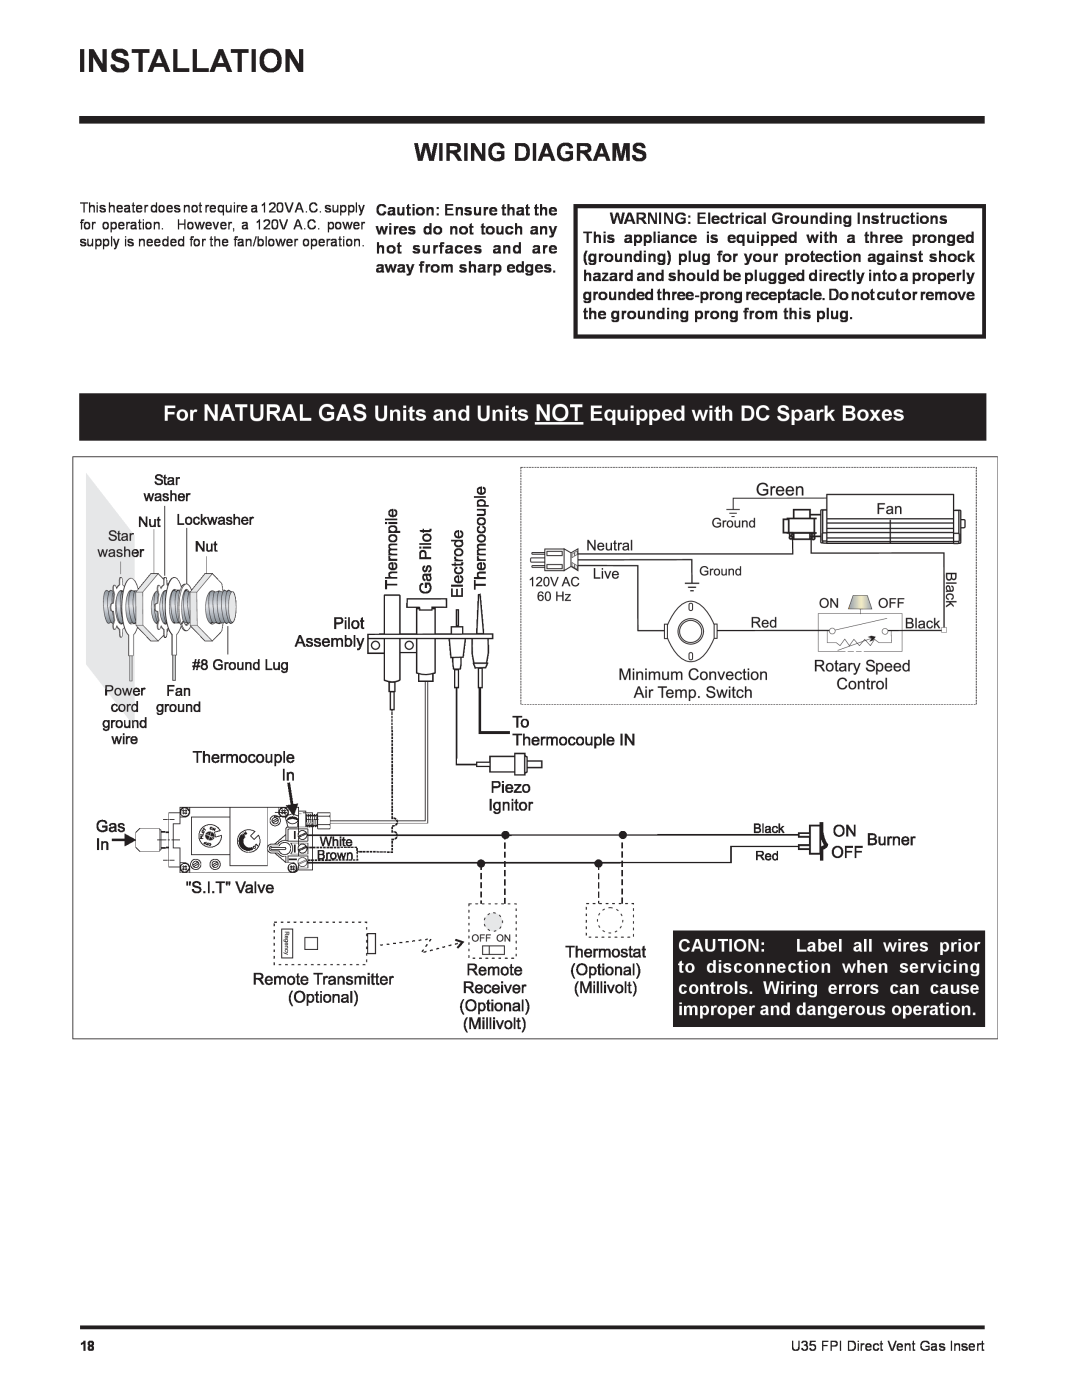 Regency U35-NG1, U35-LP1 installation manual Wiring Diagrams, WARNING Electrical Grounding Instructions 